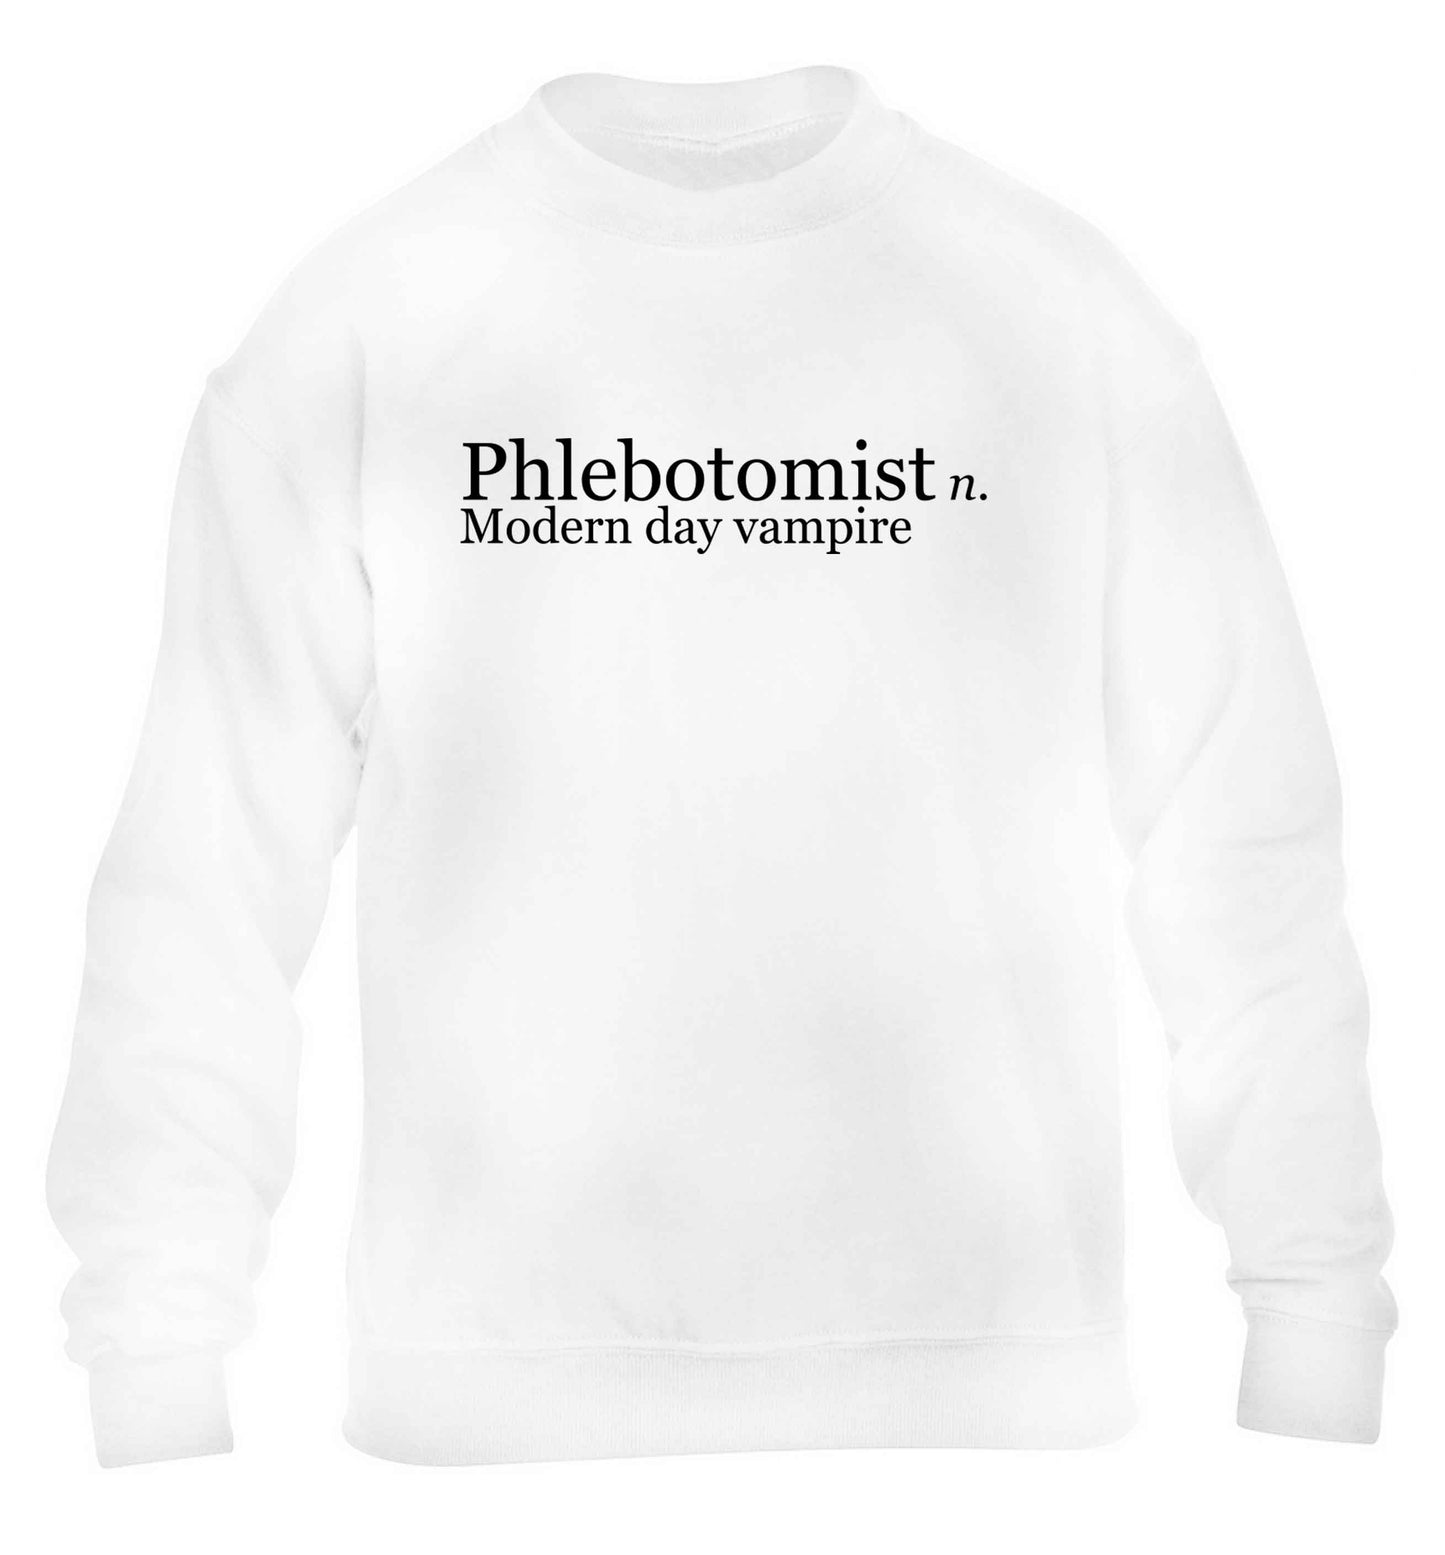 Phlebotomist - Modern day vampire children's white sweater 12-13 Years